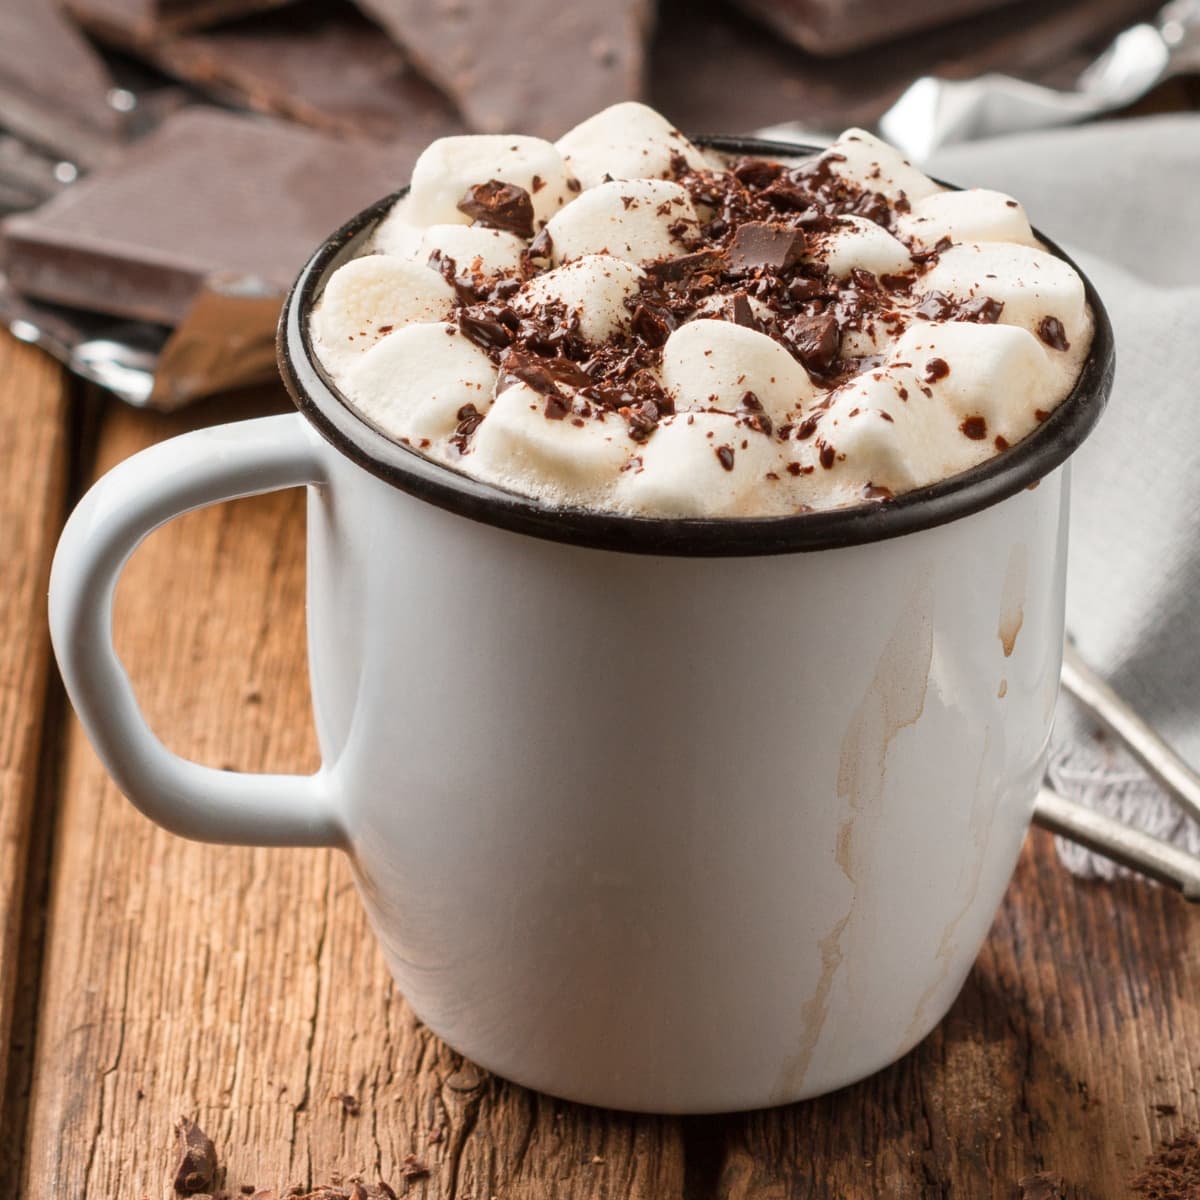 Mug of Crockpot Hot Chocolate Topped With Mallows and Chocolate